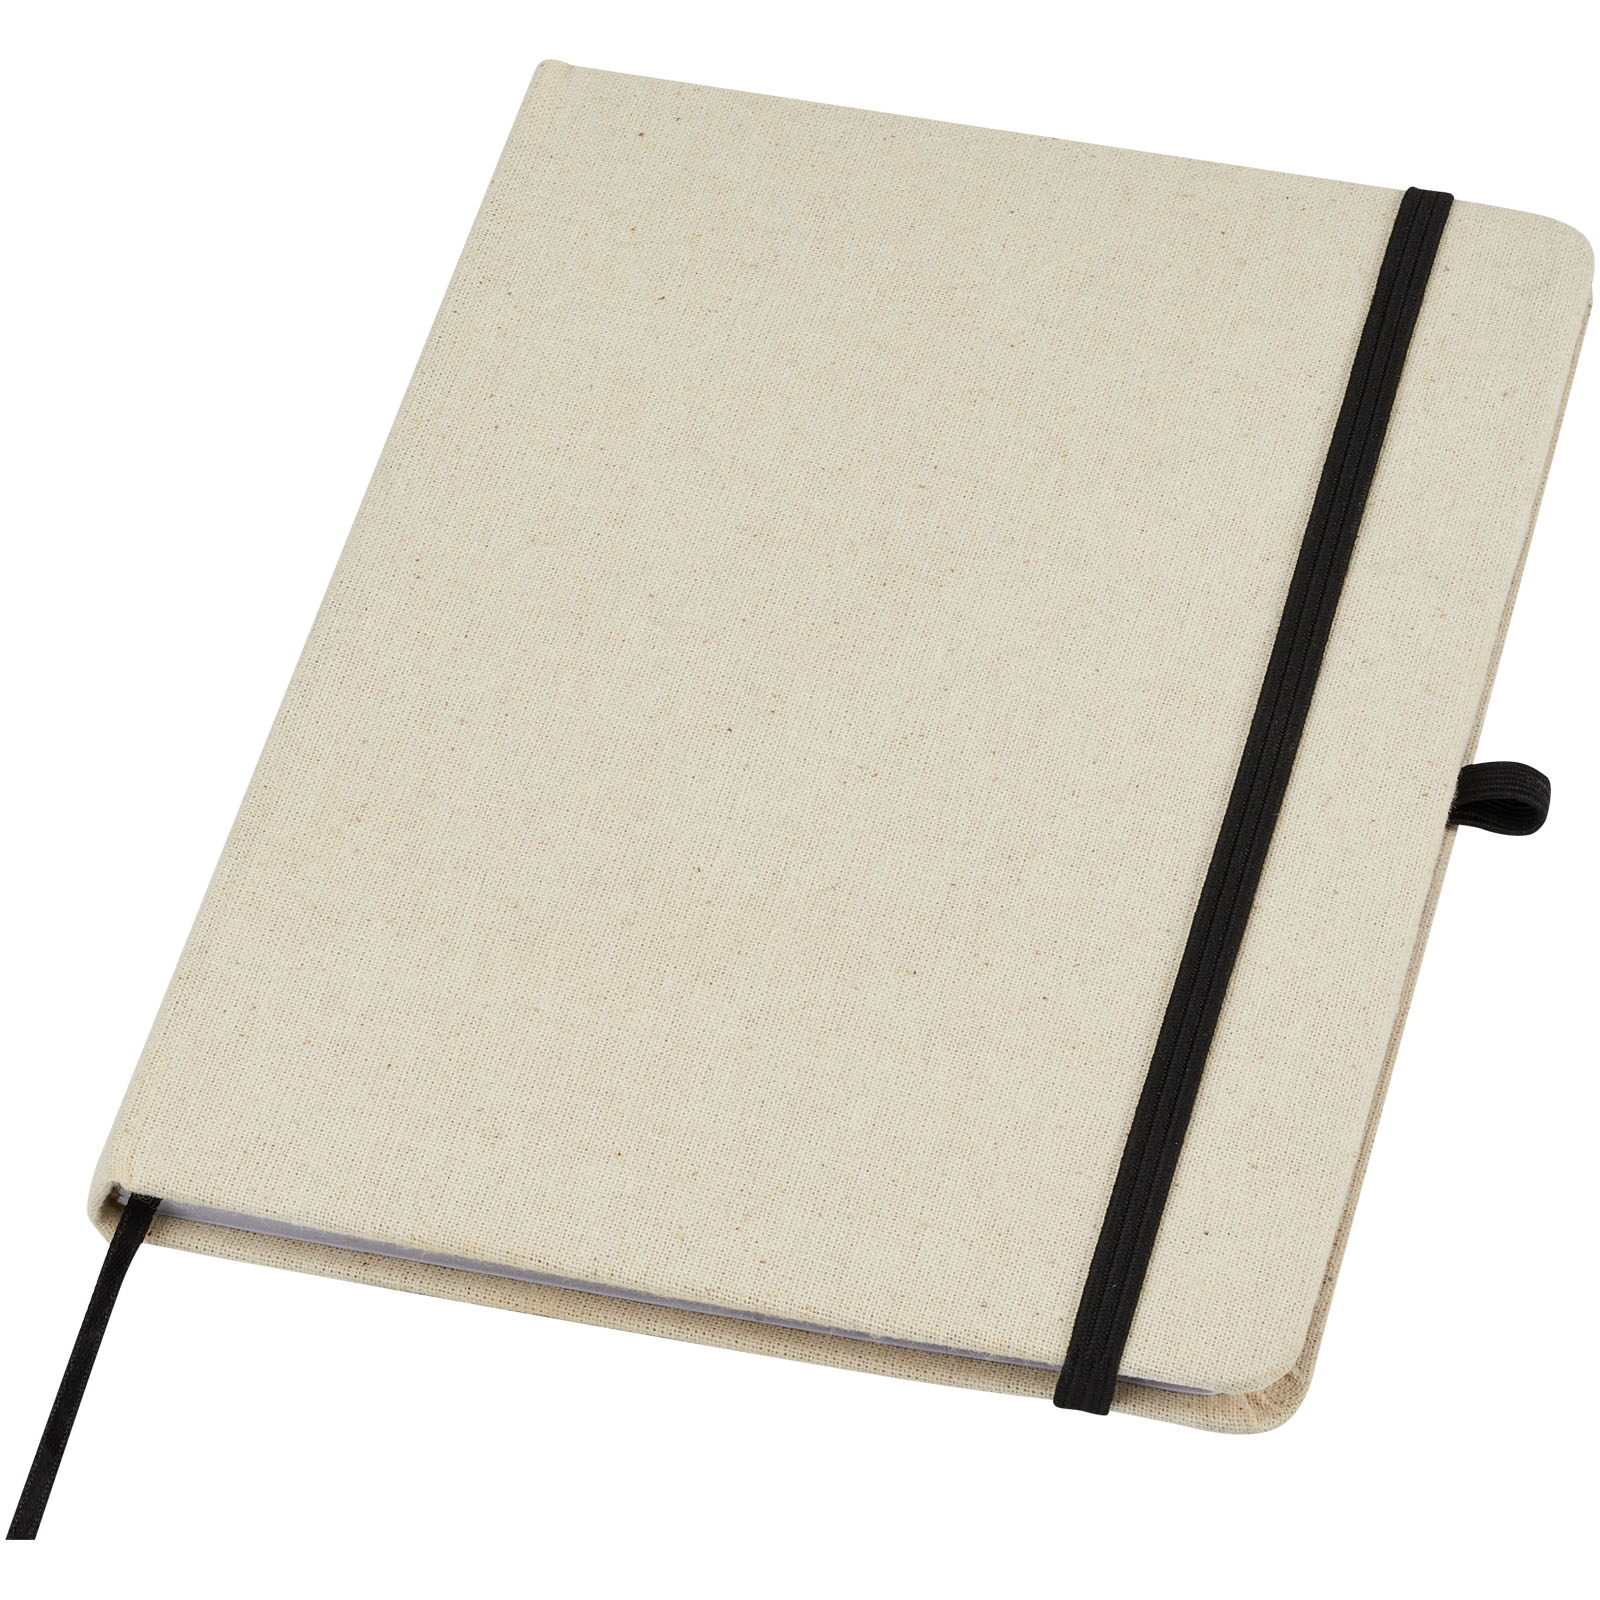 Tutico notesbog med hardcover i organisk bomuld